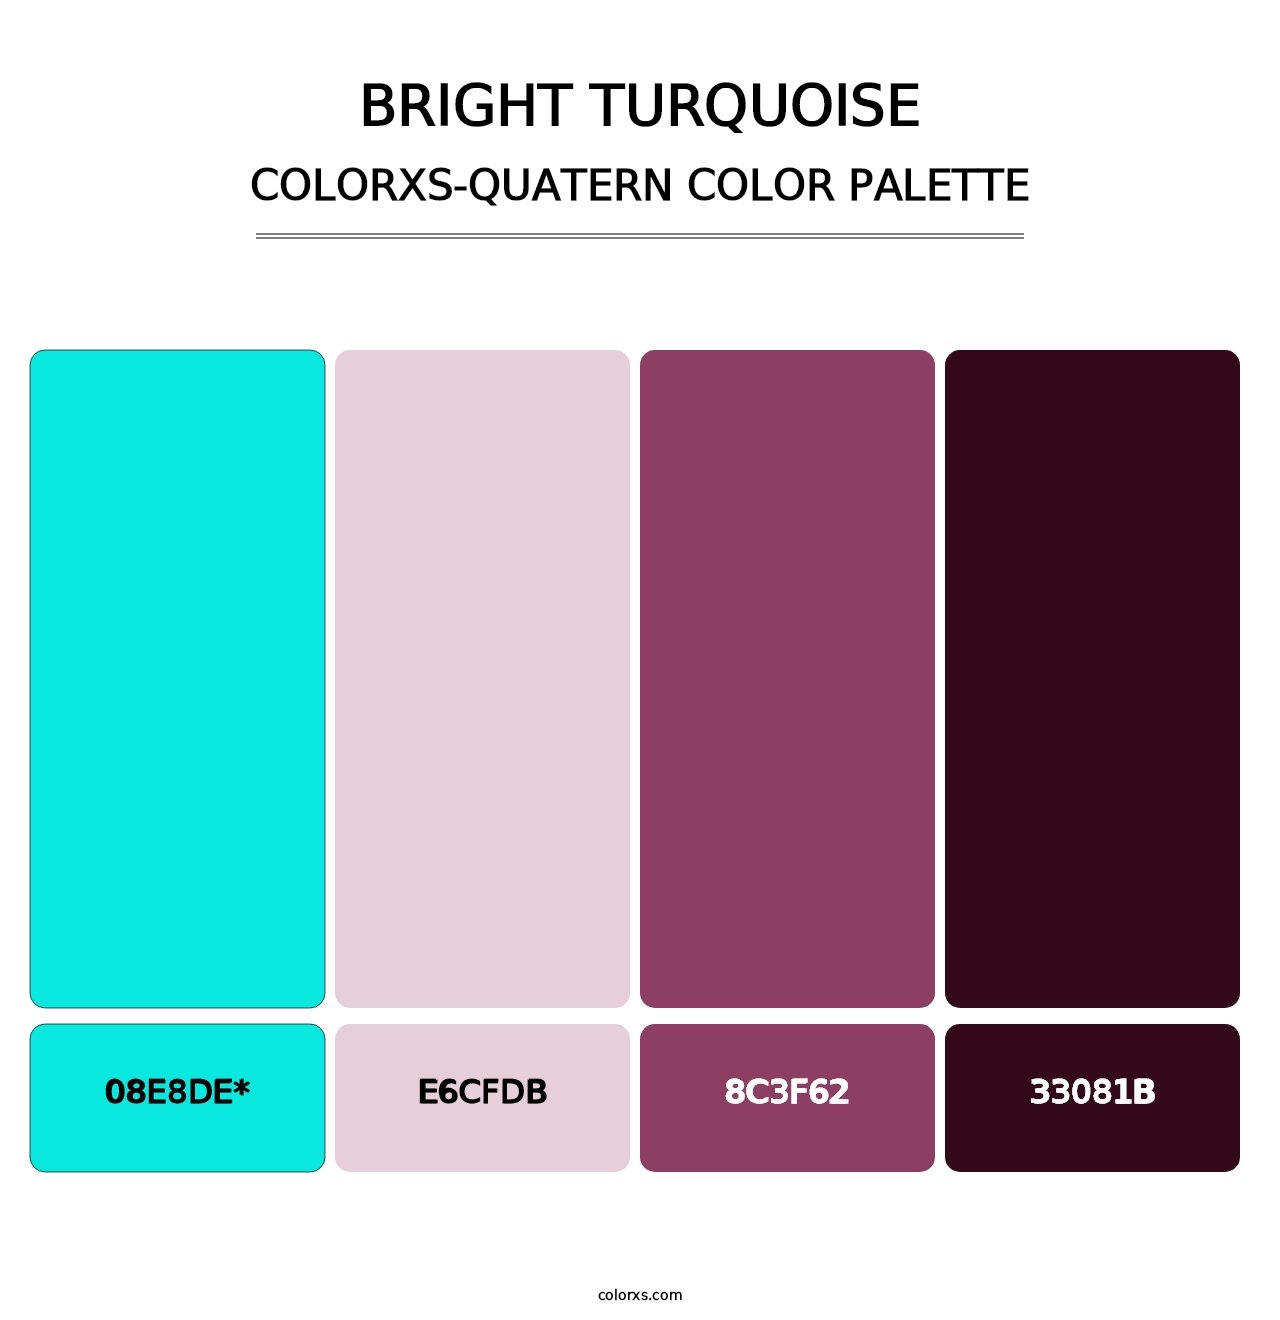 Bright Turquoise - Colorxs Quatern Palette